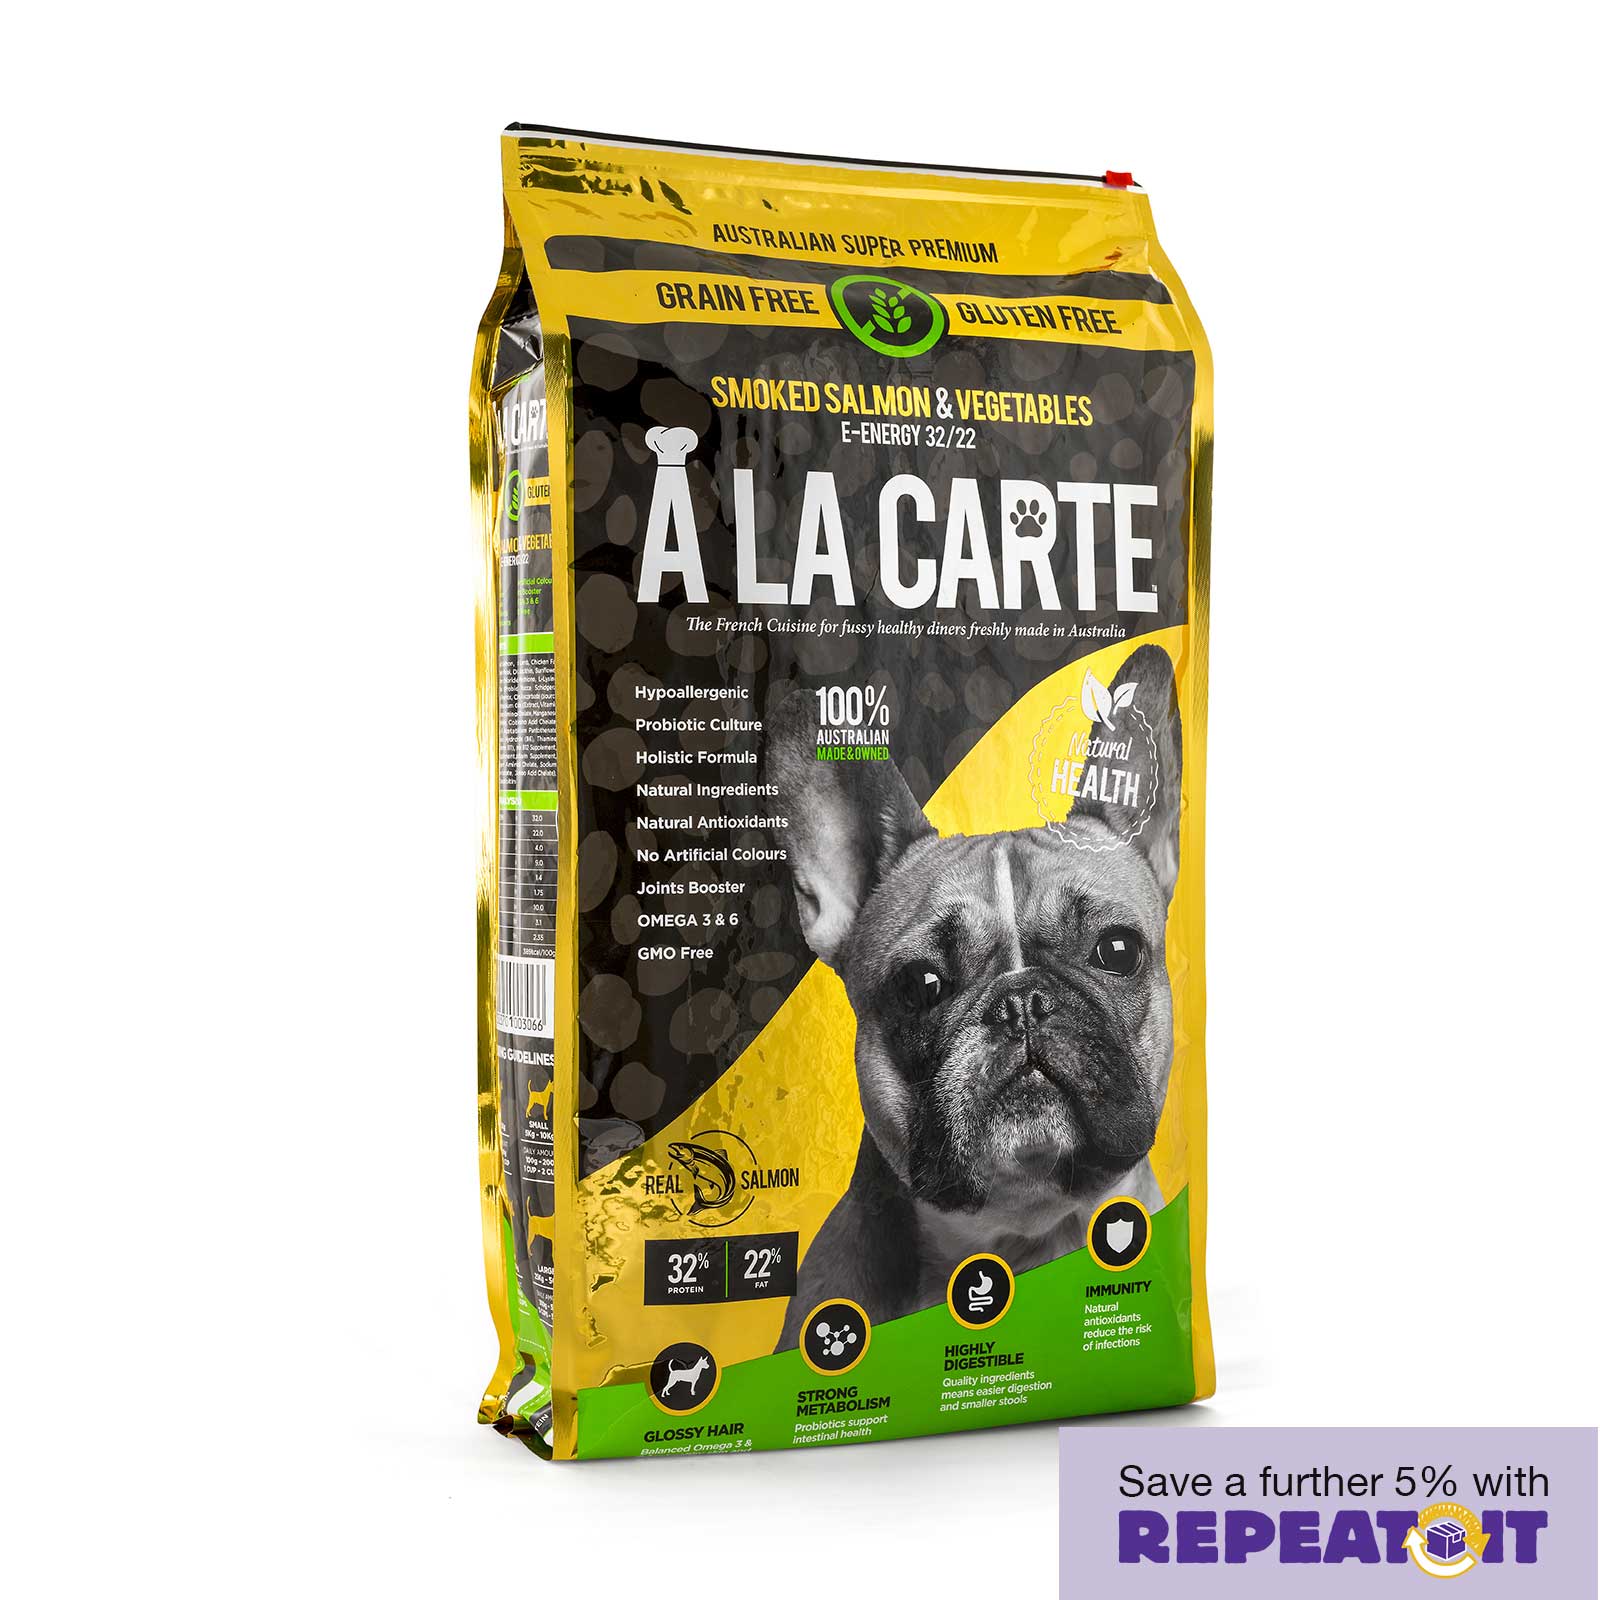 A La Carte Grain Free Dog Food E-Energy Smoked Salmon & Vegetable